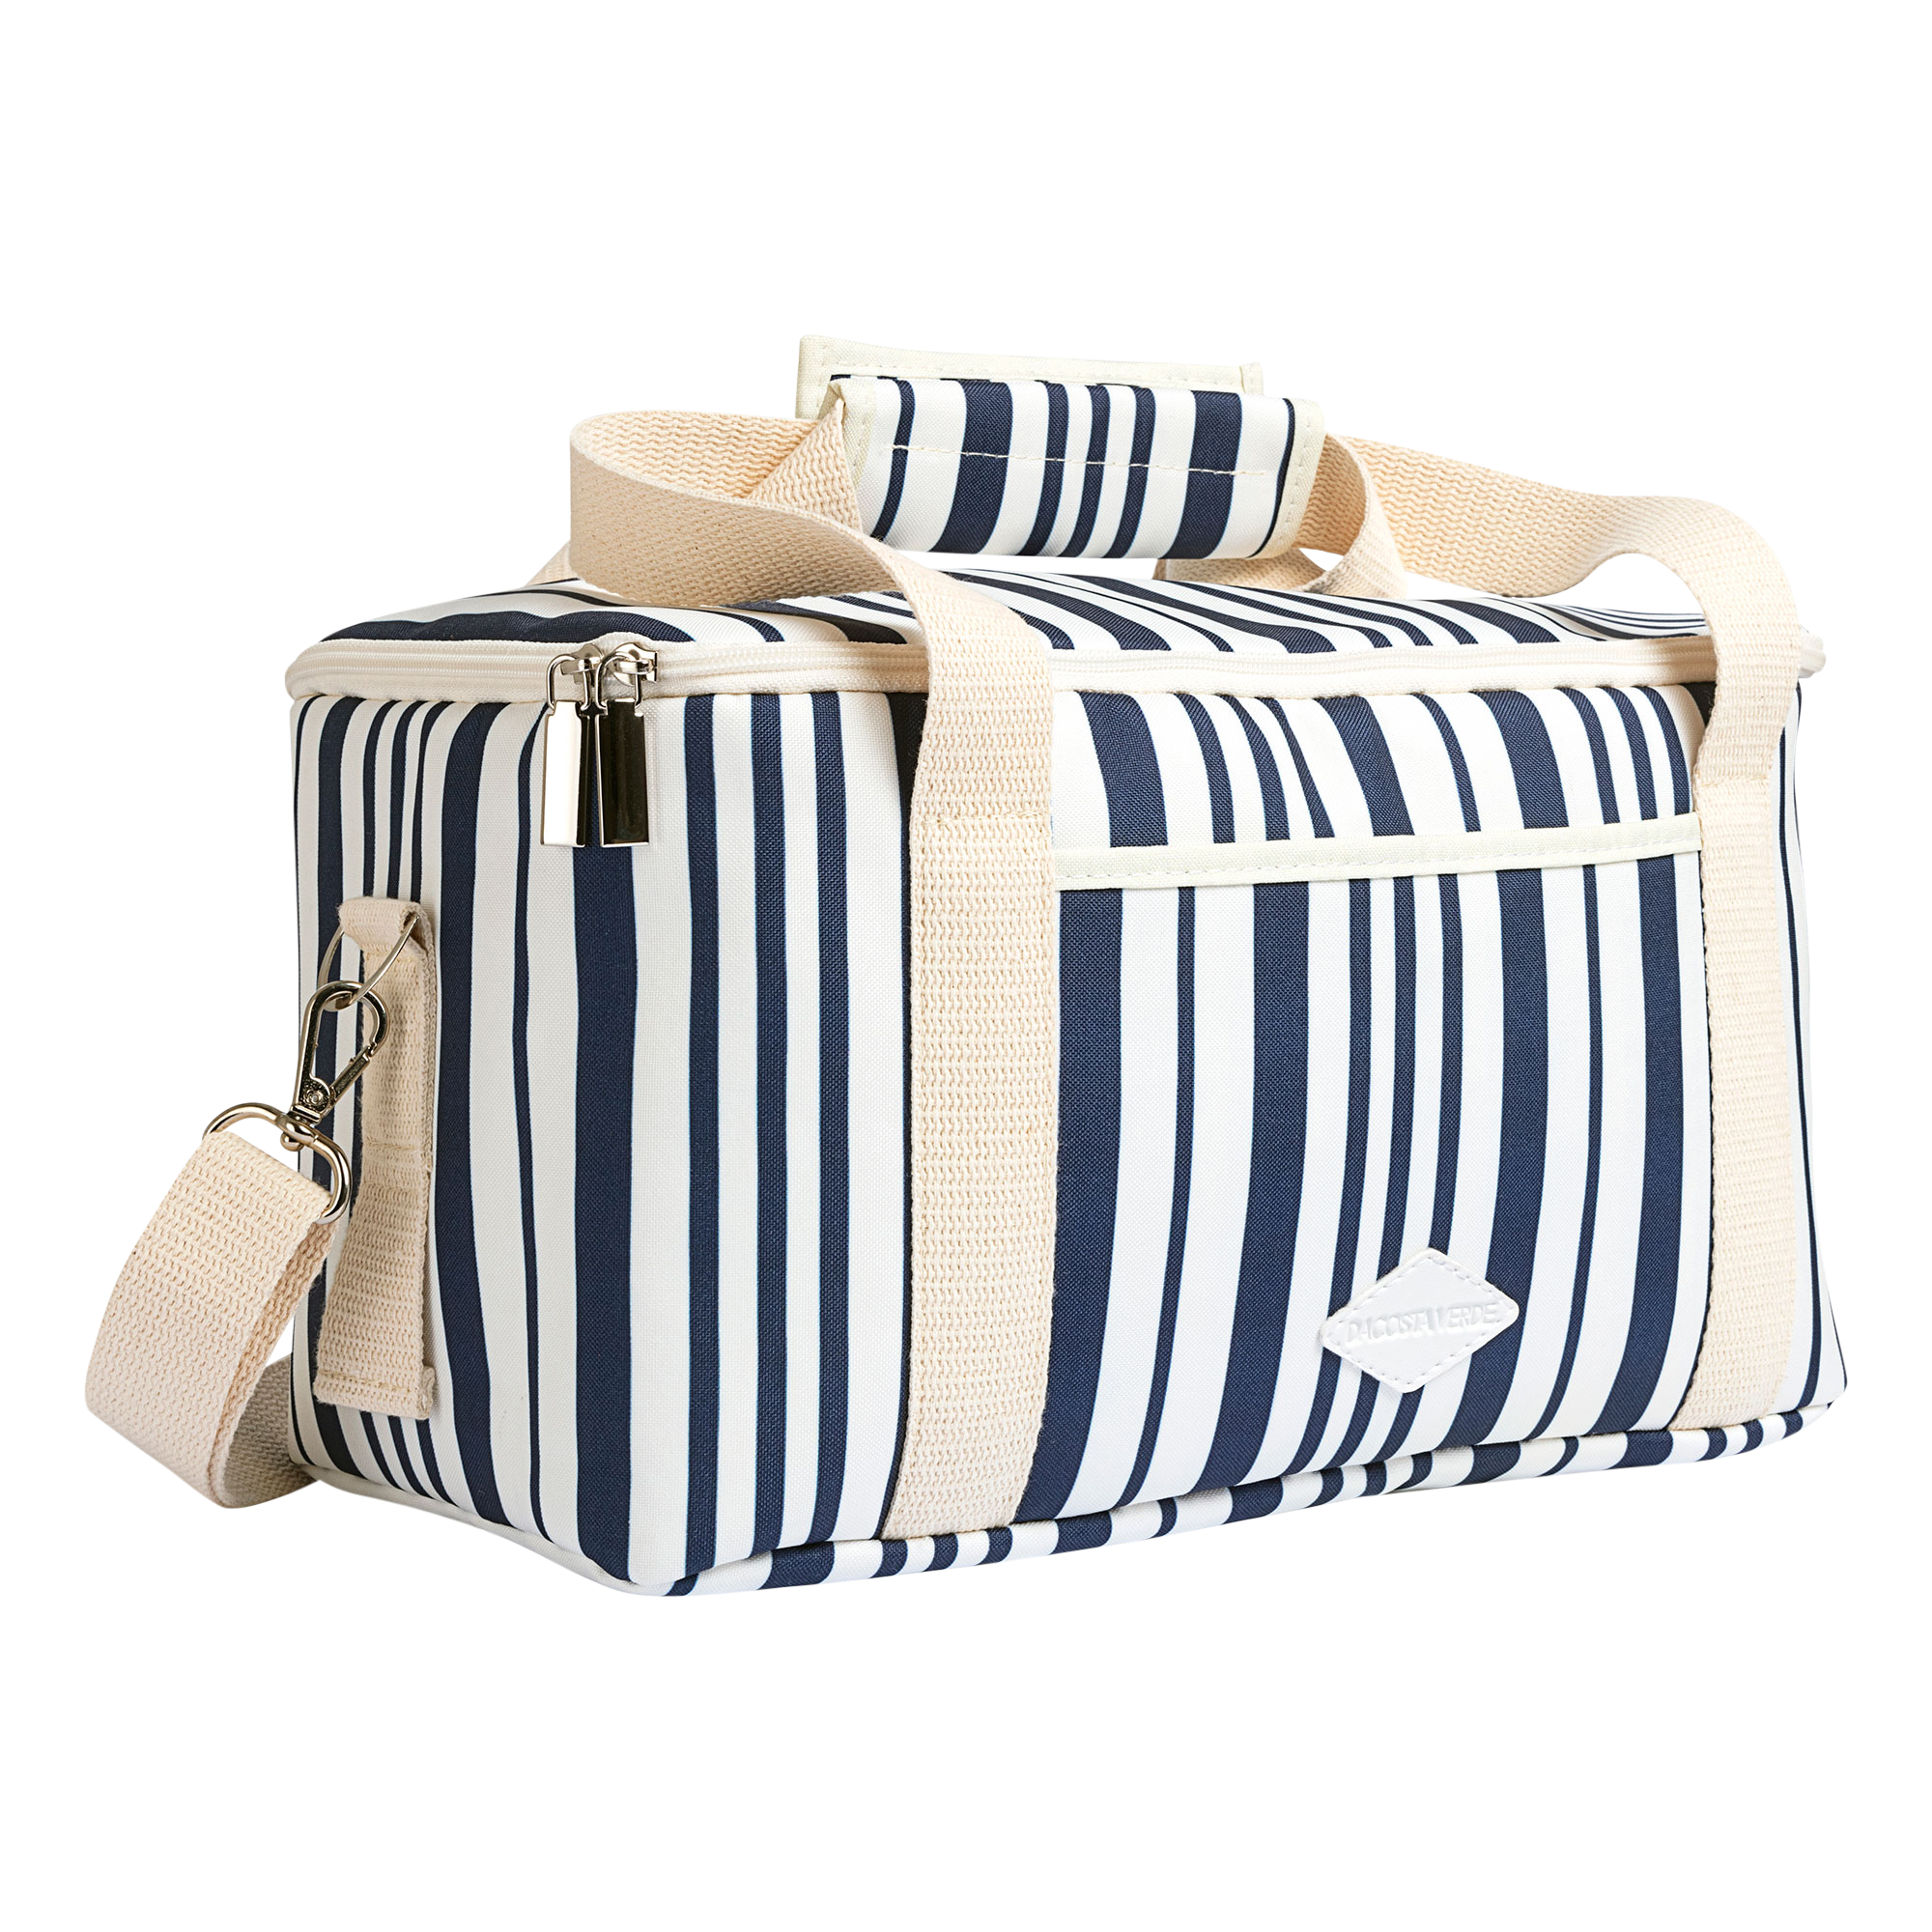 blue white striped bag